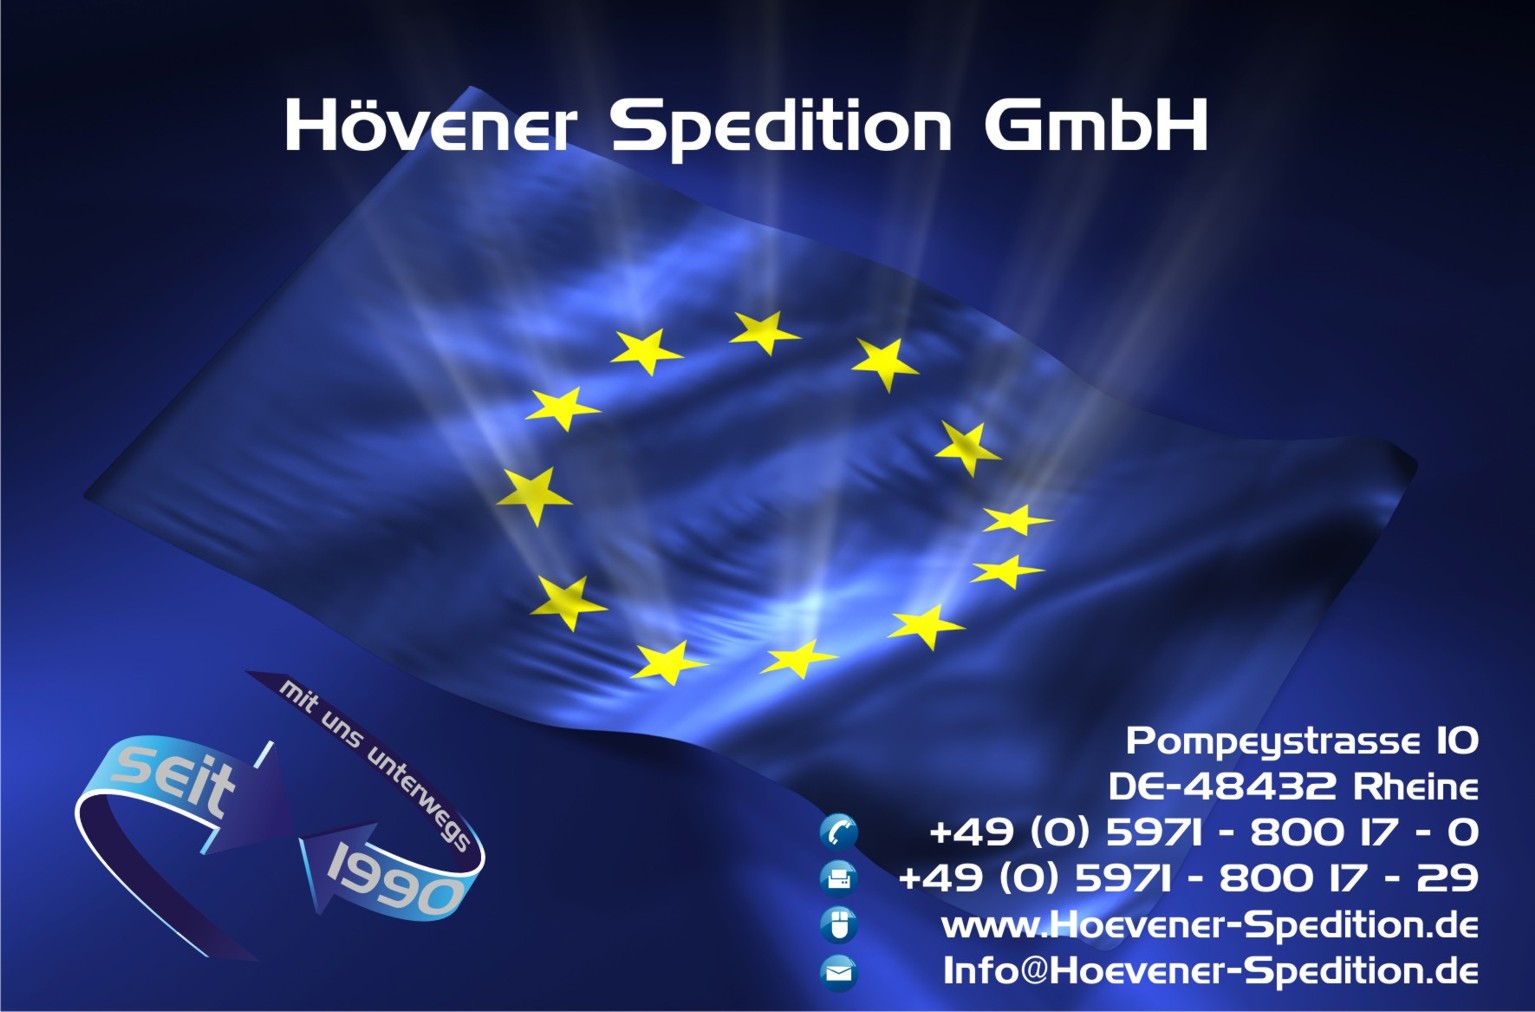 Hvener Spedition GmbH